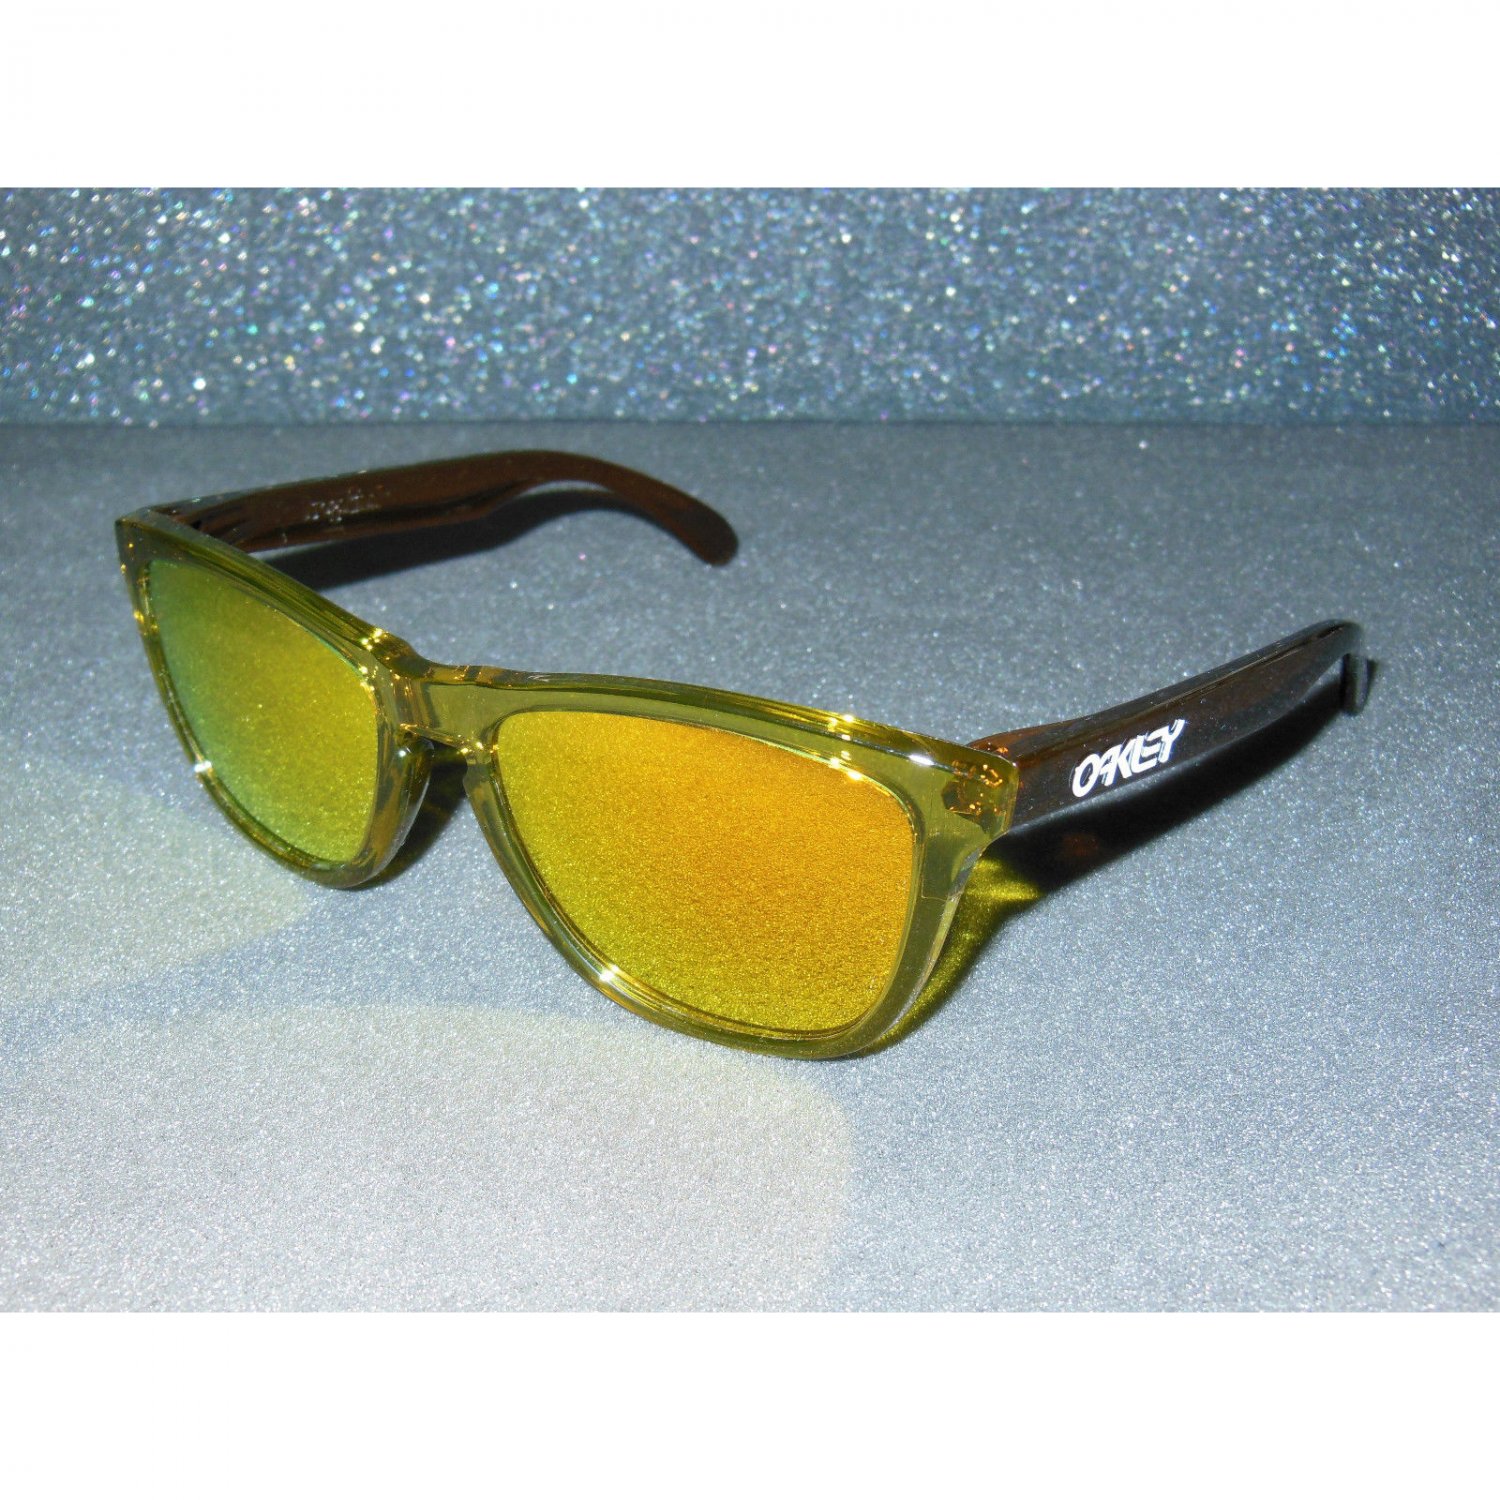 Oakley Frogskins Sunglasses Octane/Fire Iridium